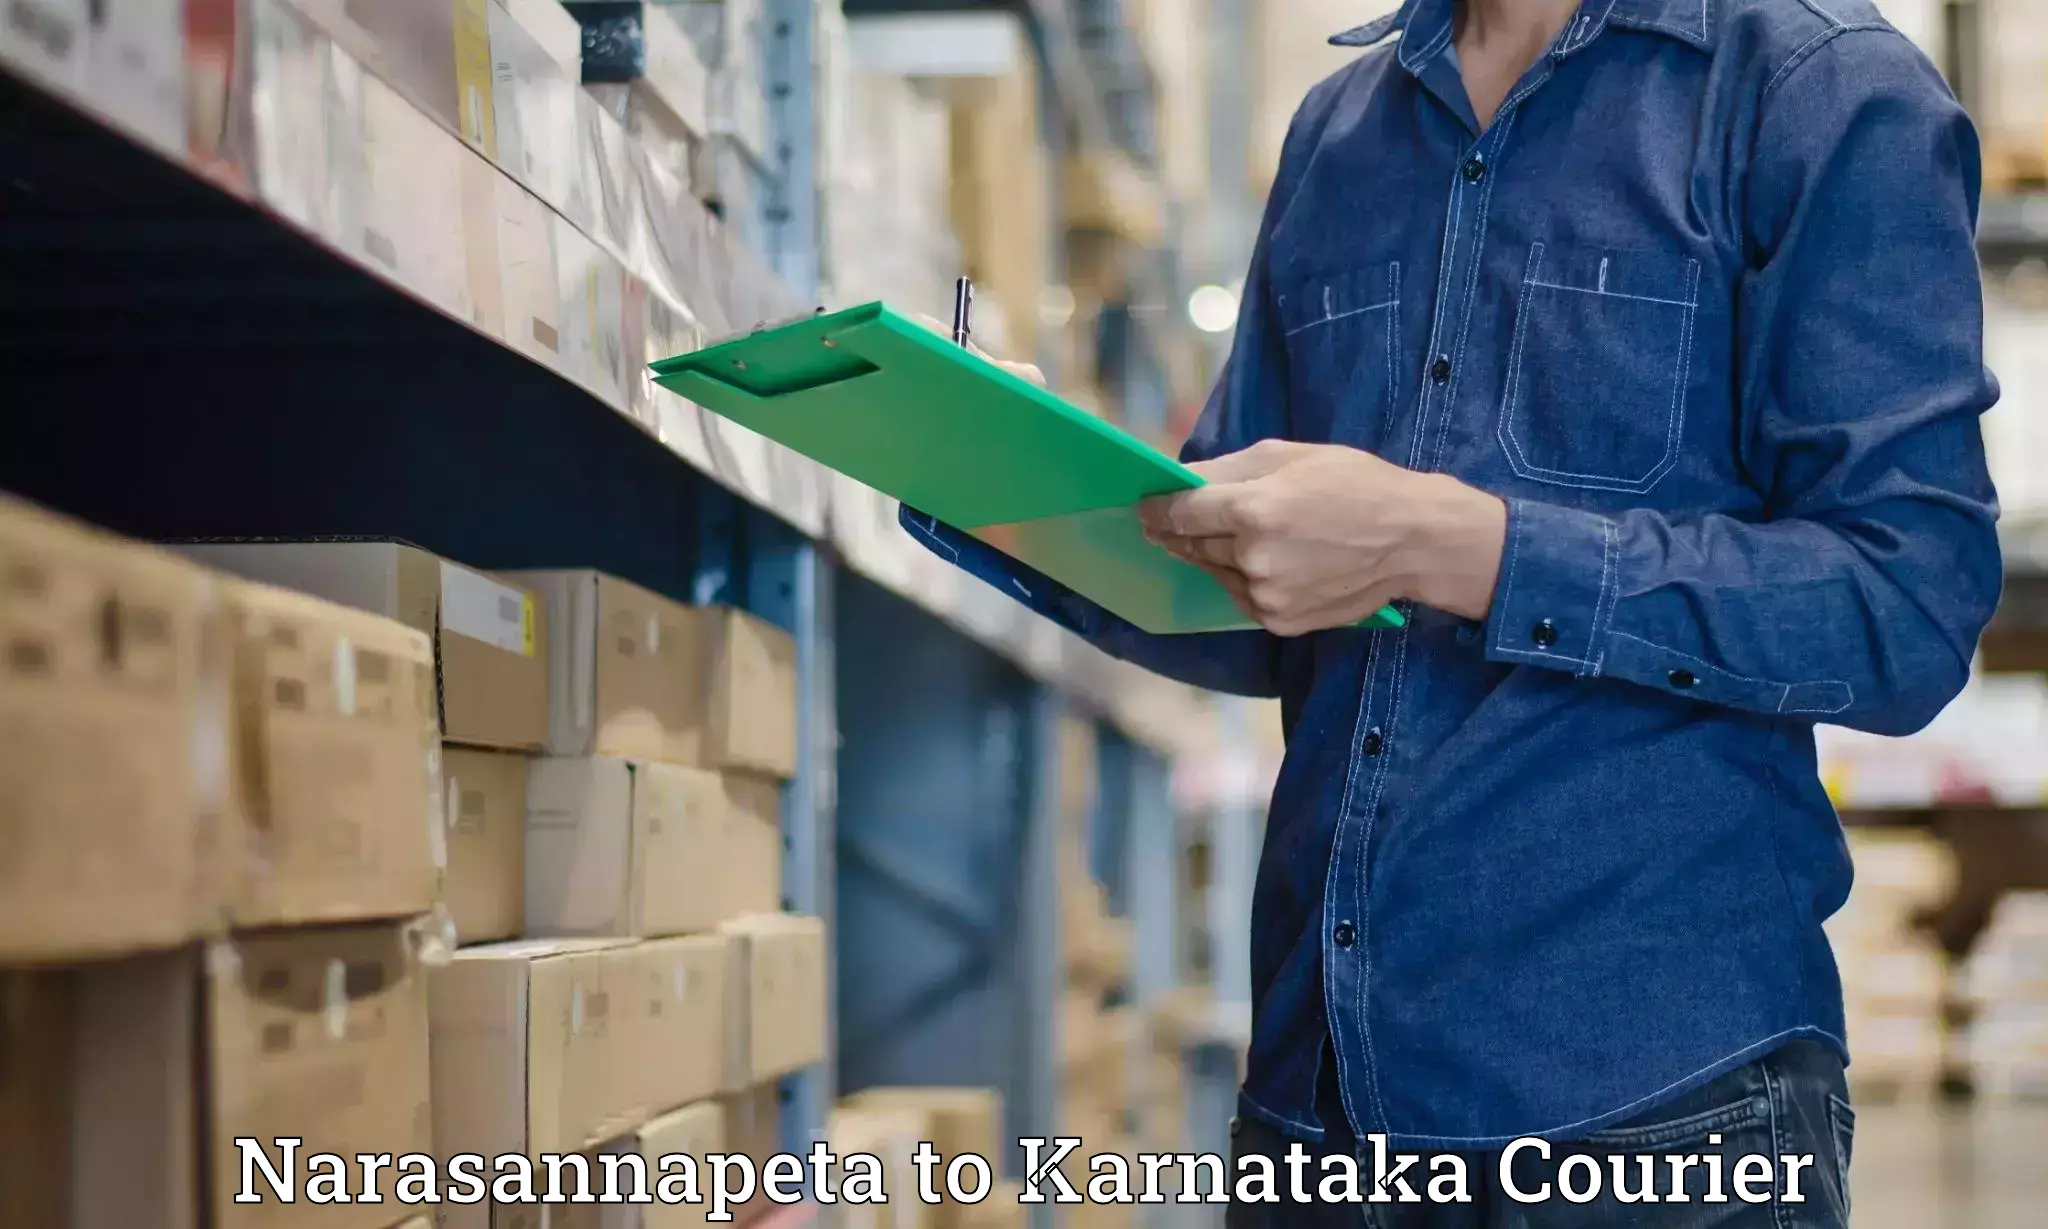 State-of-the-art courier technology Narasannapeta to Kerur